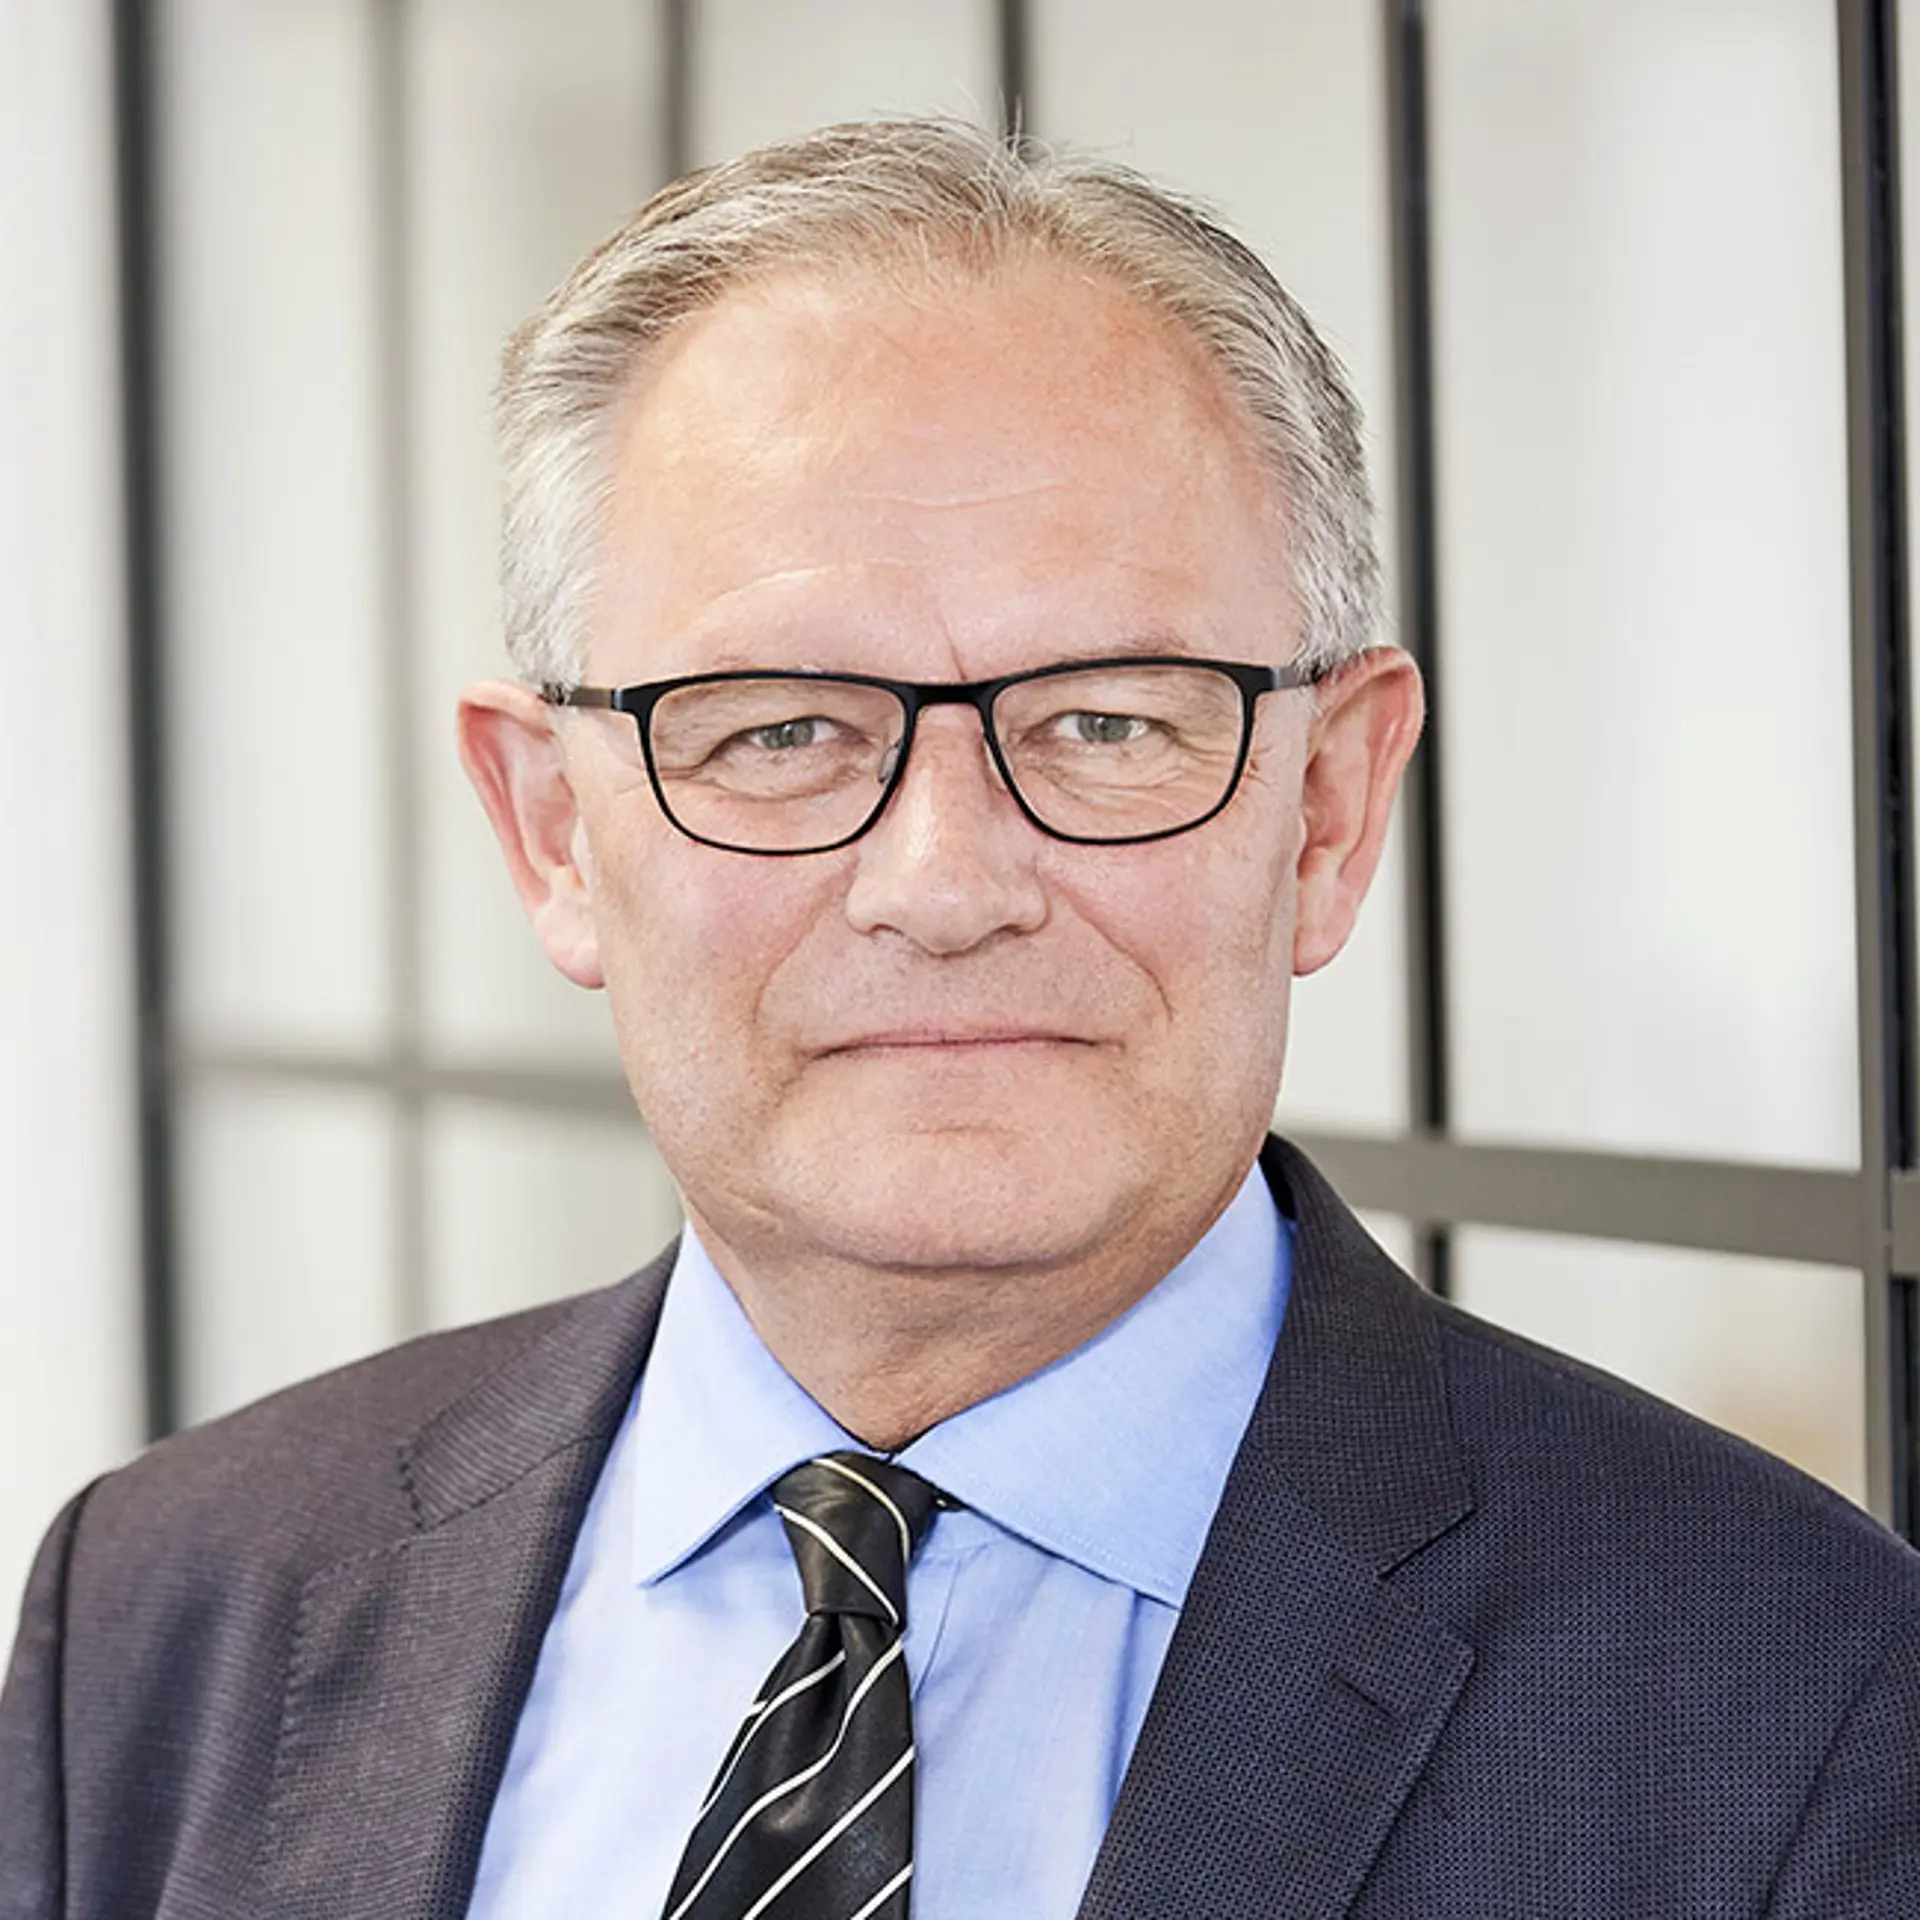 Adm bankdirektør Jan Ulsø Madsen